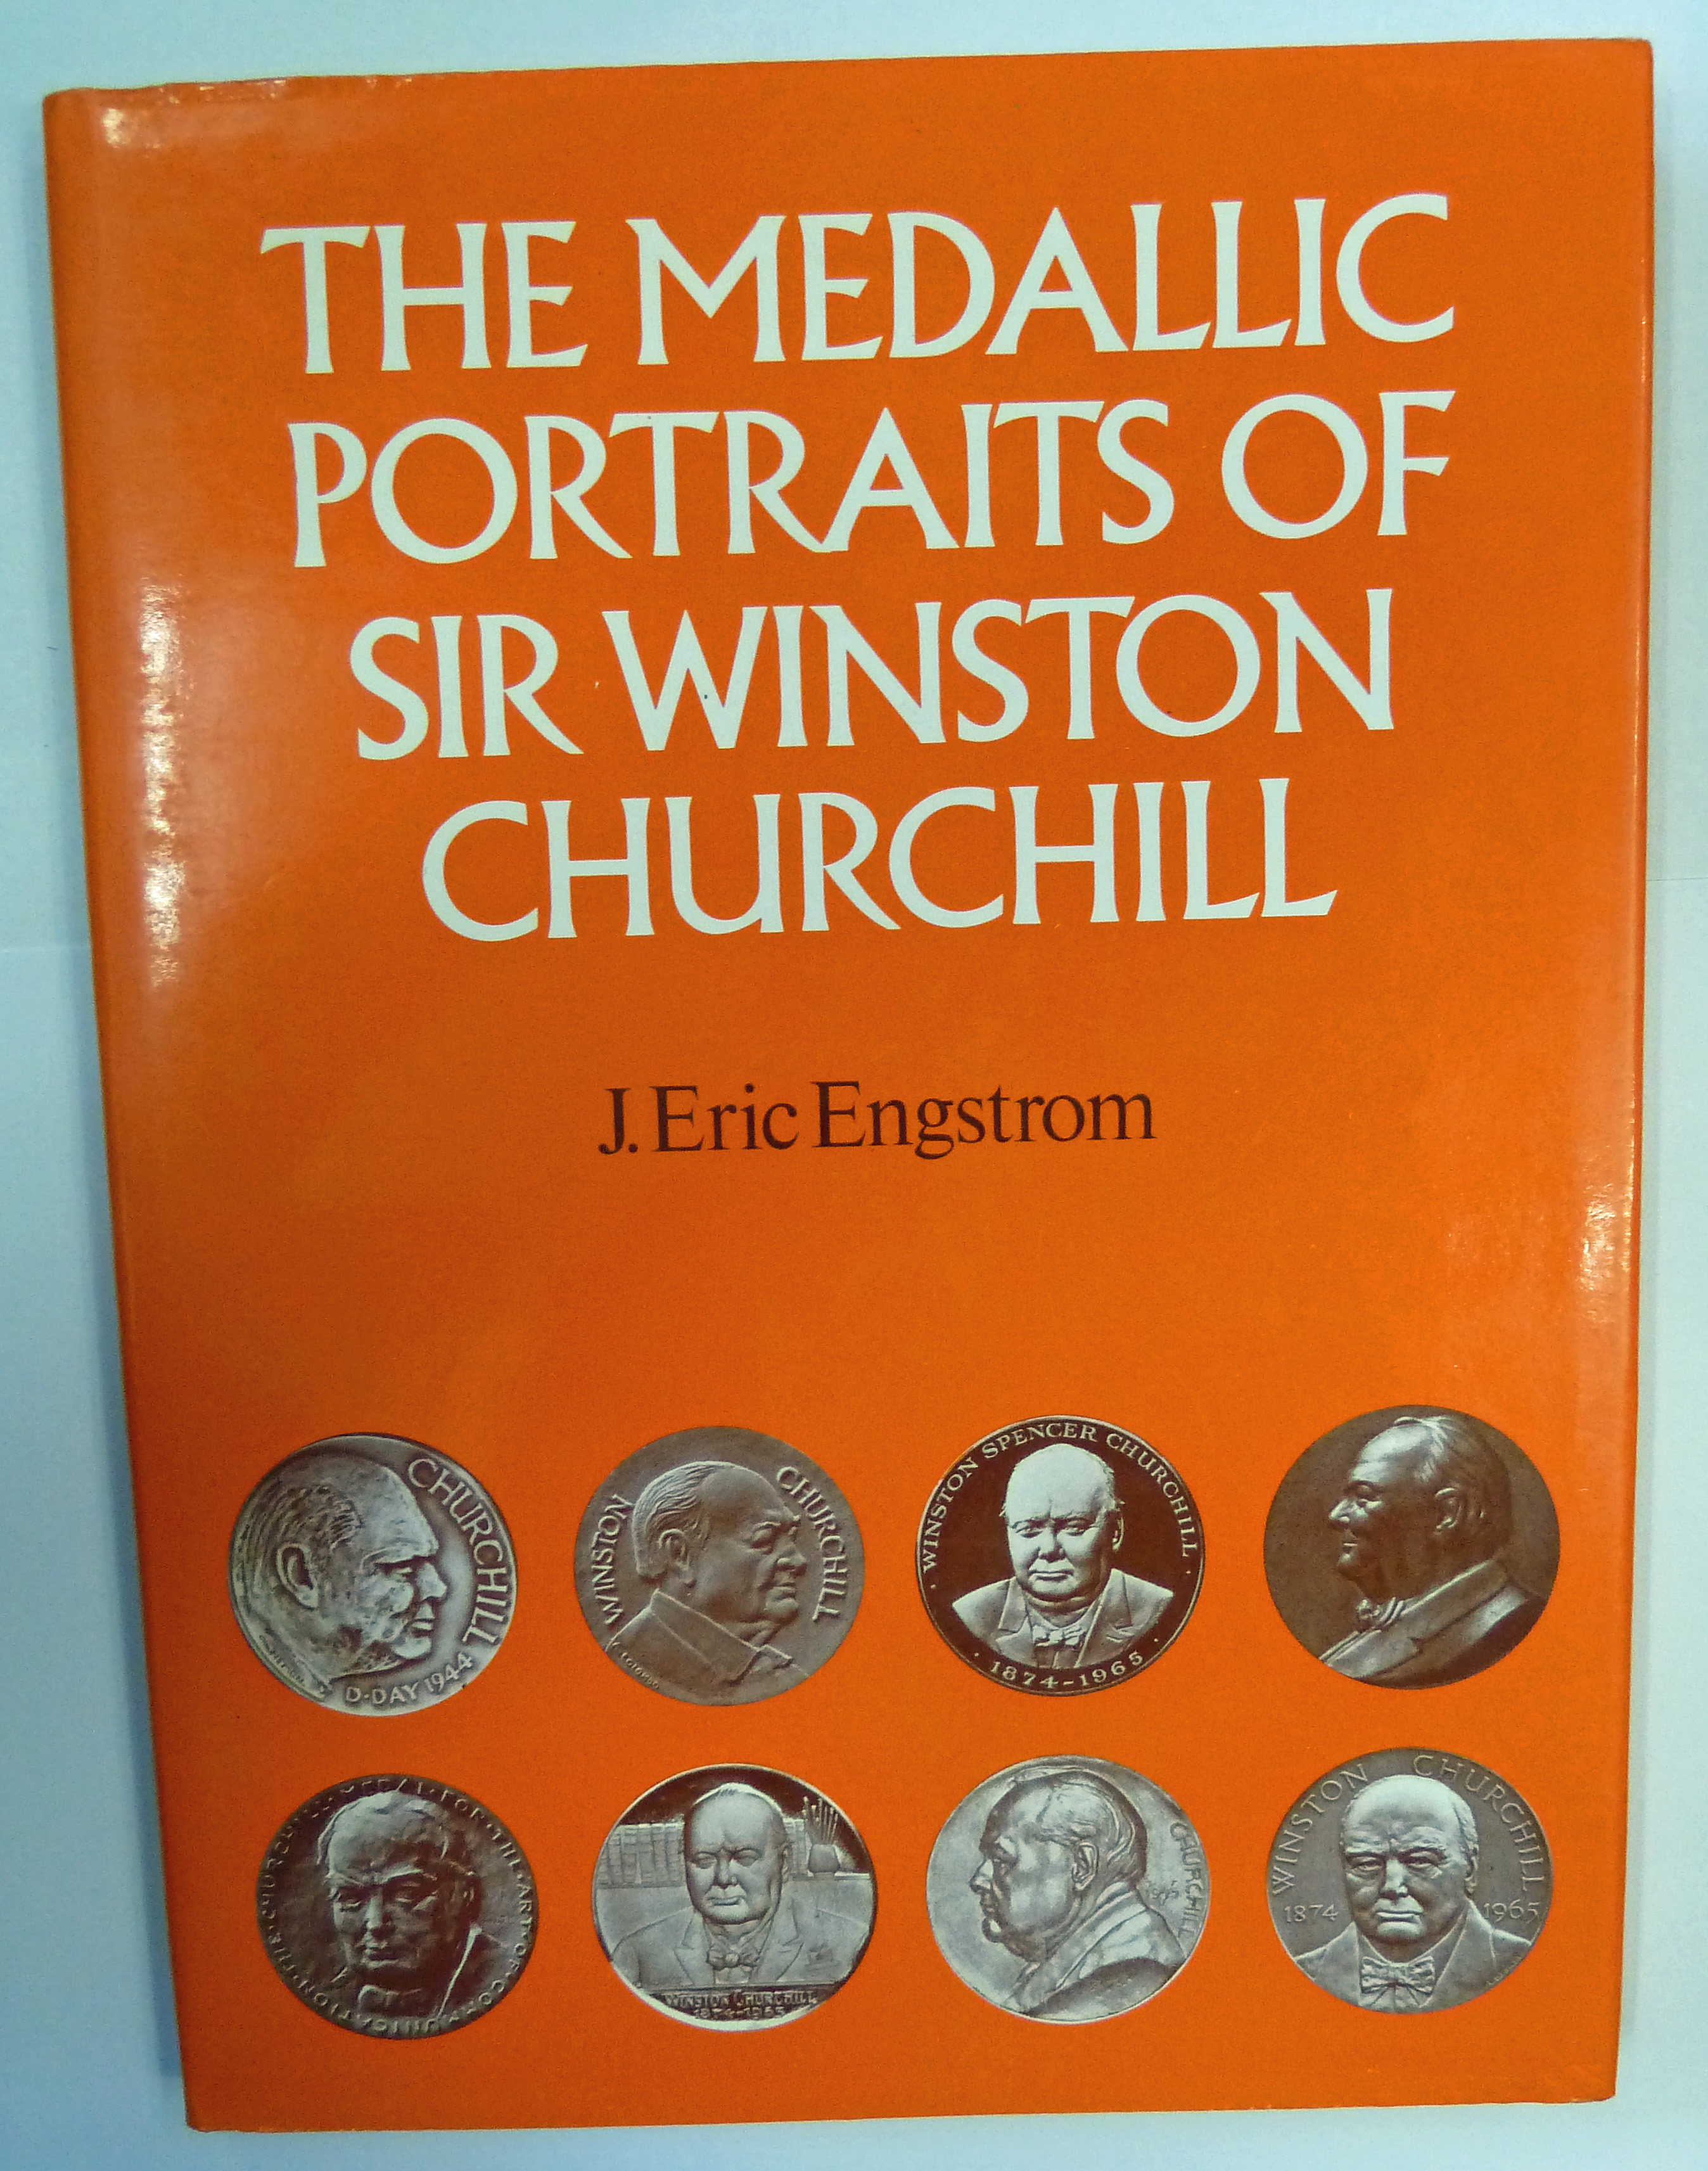 The Medallic Portraits Of Winston Churchill